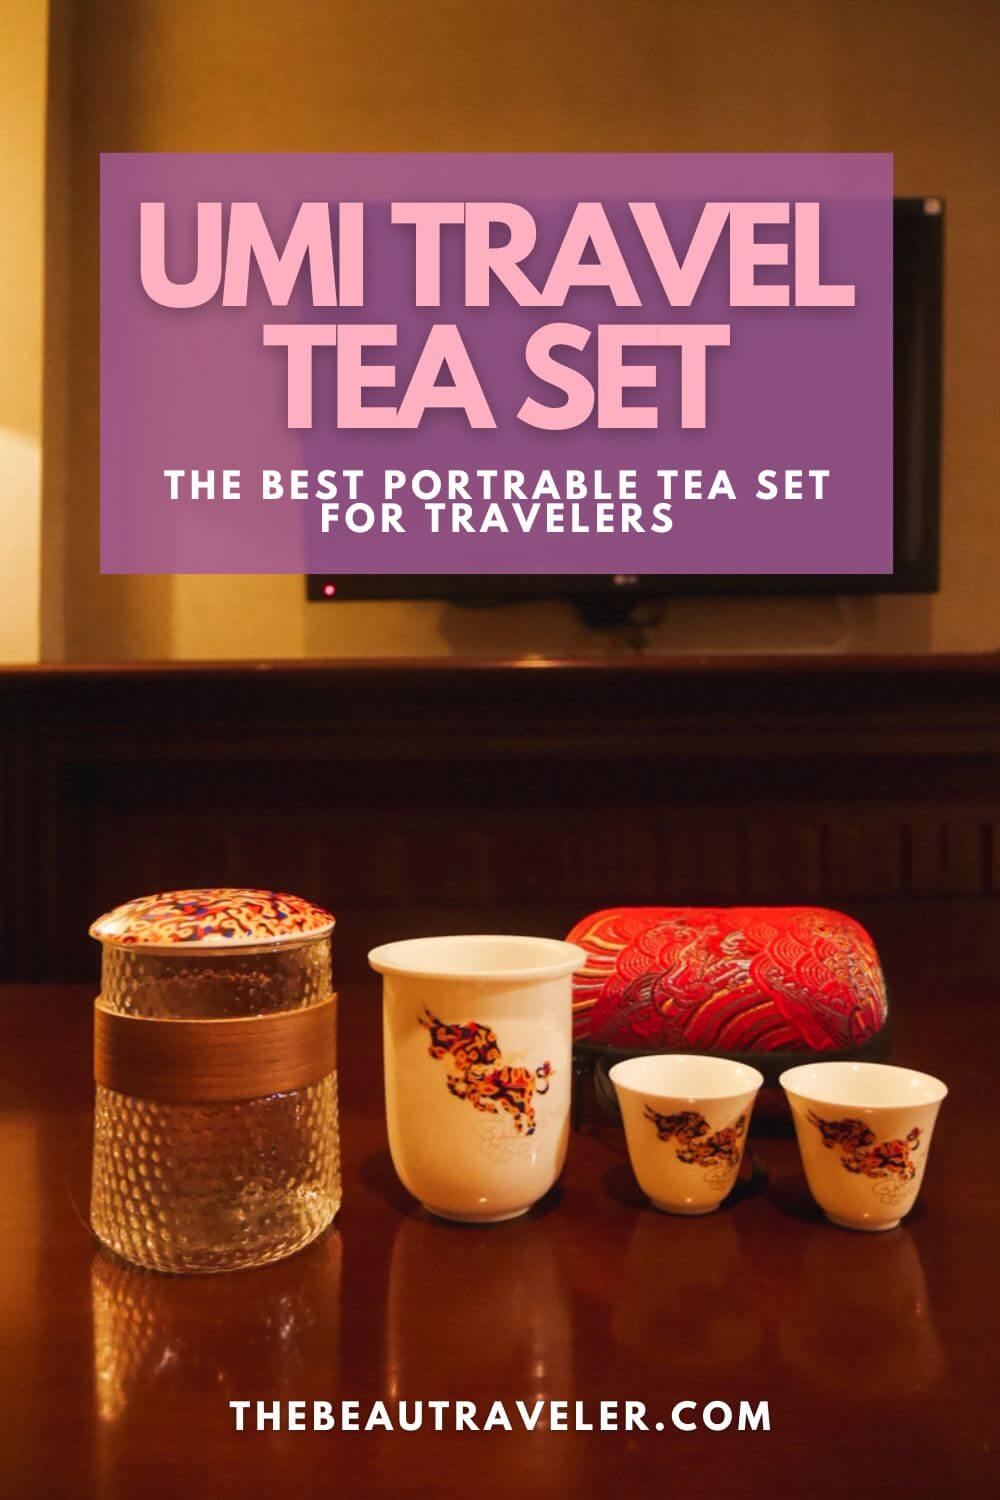 Umi Travel Tea Set: The Best Portable Tea Set for Travelers - The BeauTraveler